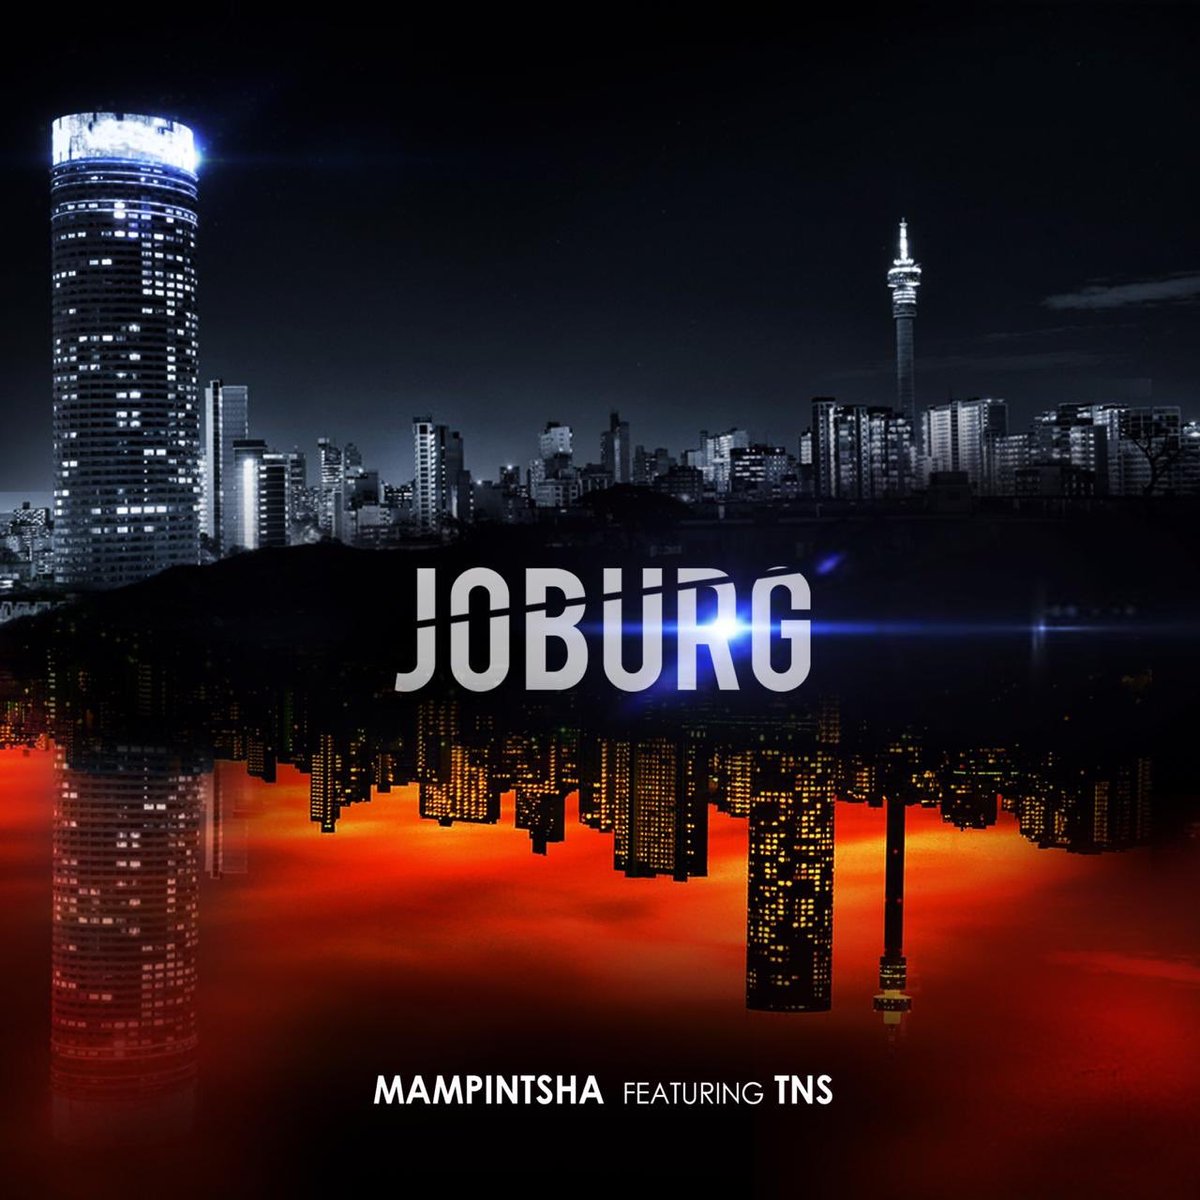 Mampintsha - Joburg Feat. TNS 1